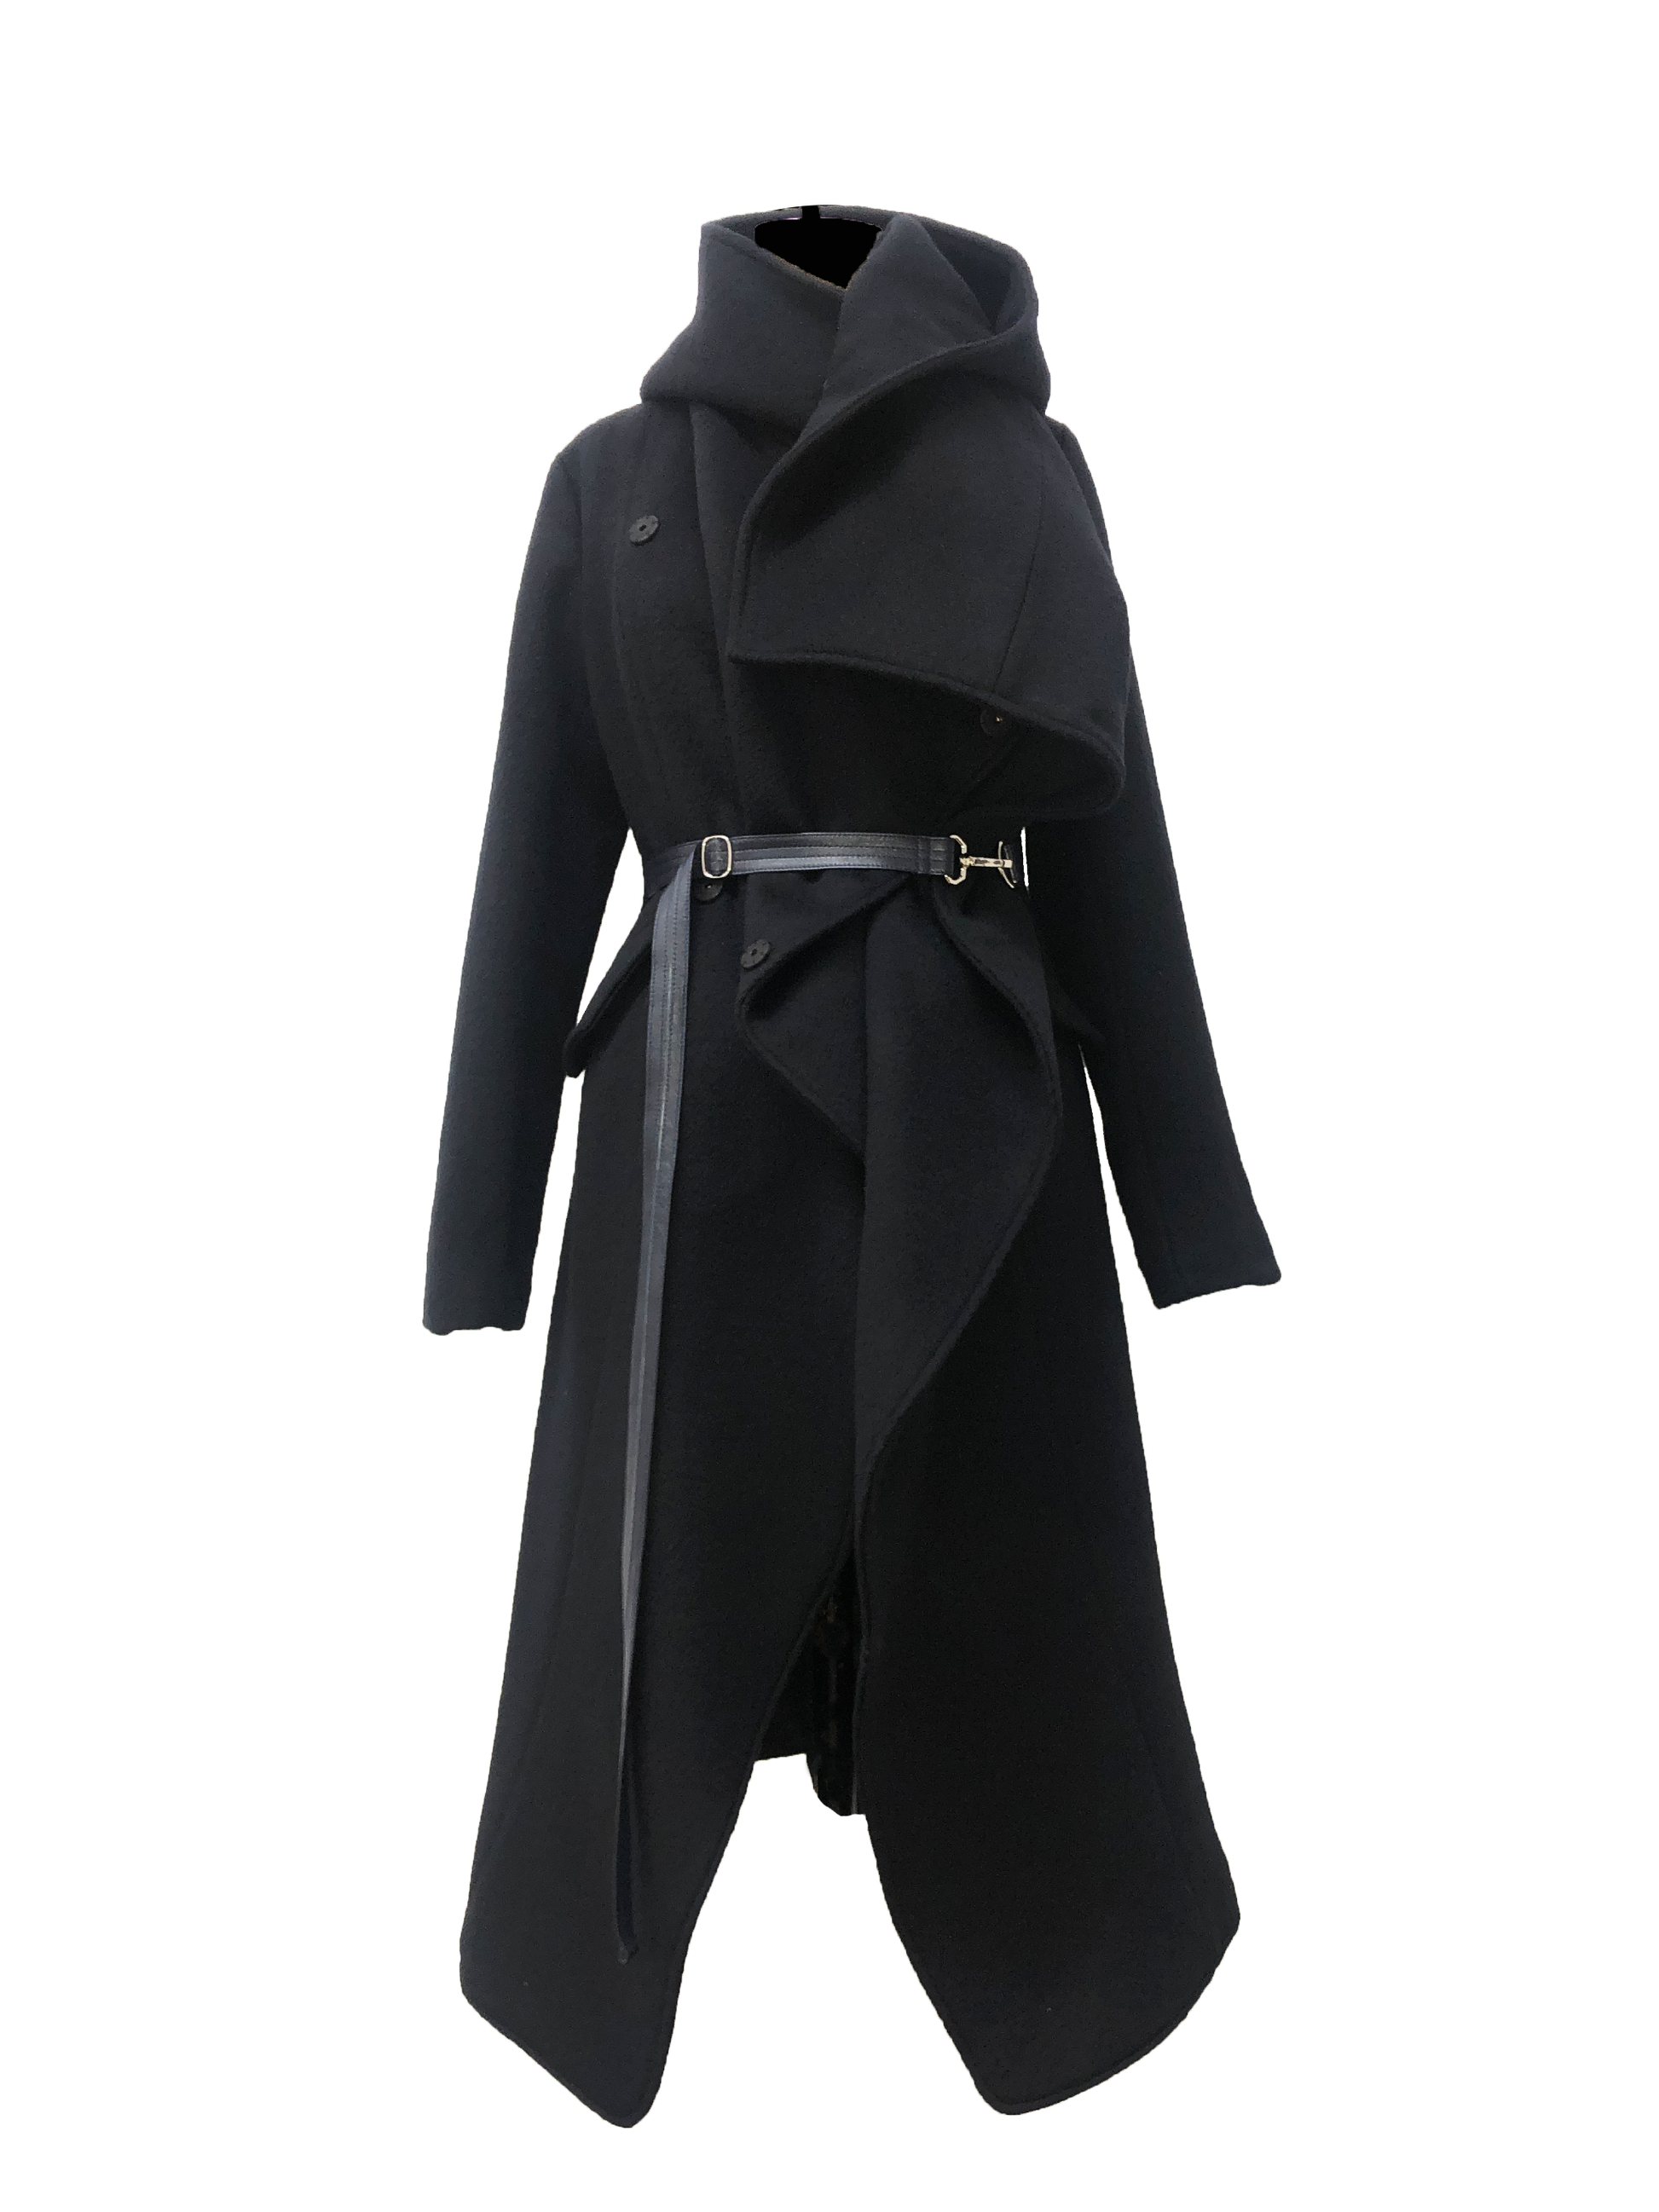 Medium length Black Coat with a hood and adjustable lambskin leather belt alongside metal clip closures